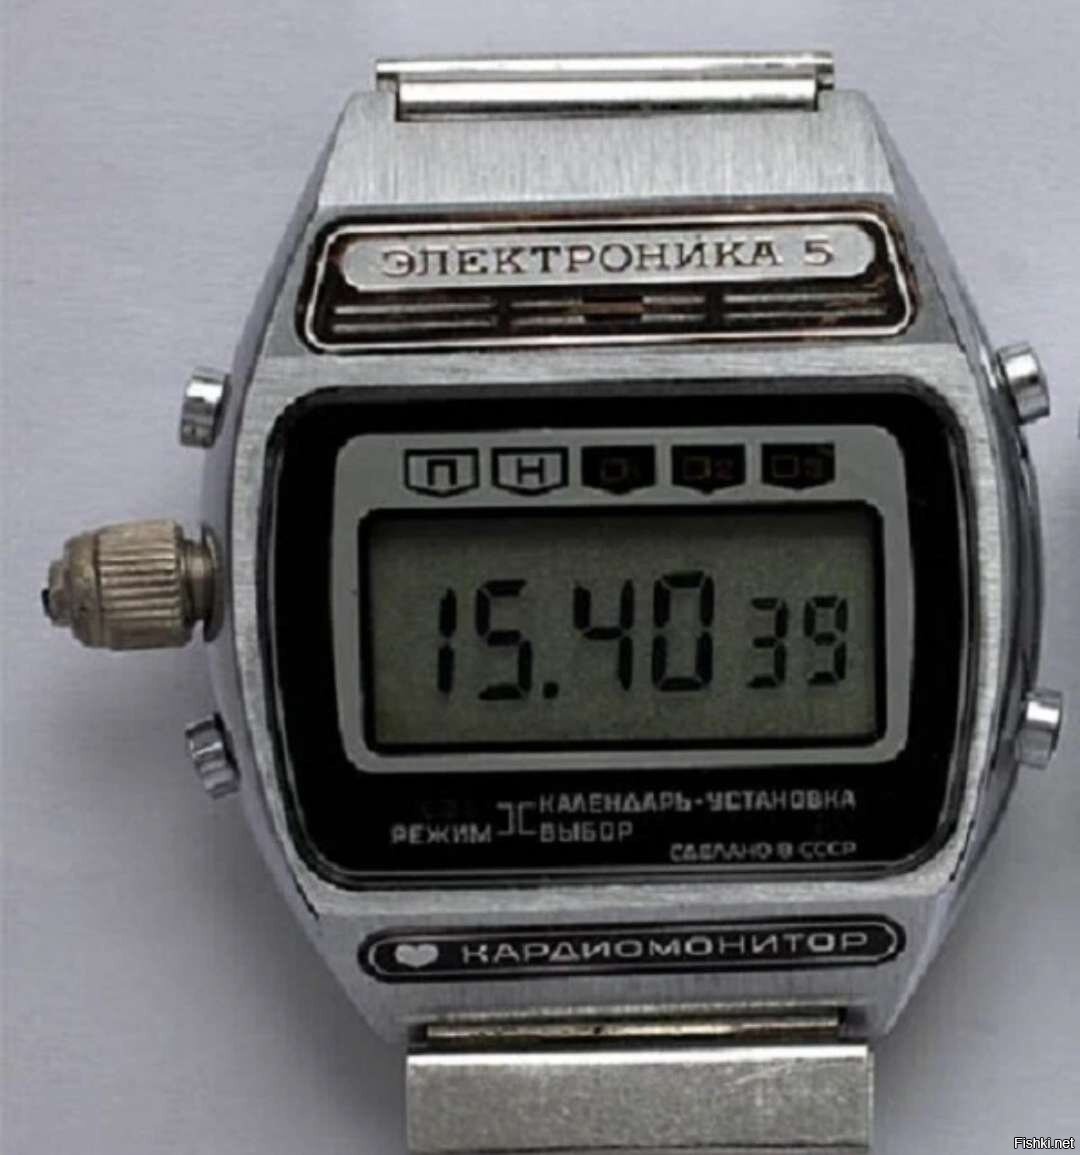 Электронные часы электроника 5 СССР